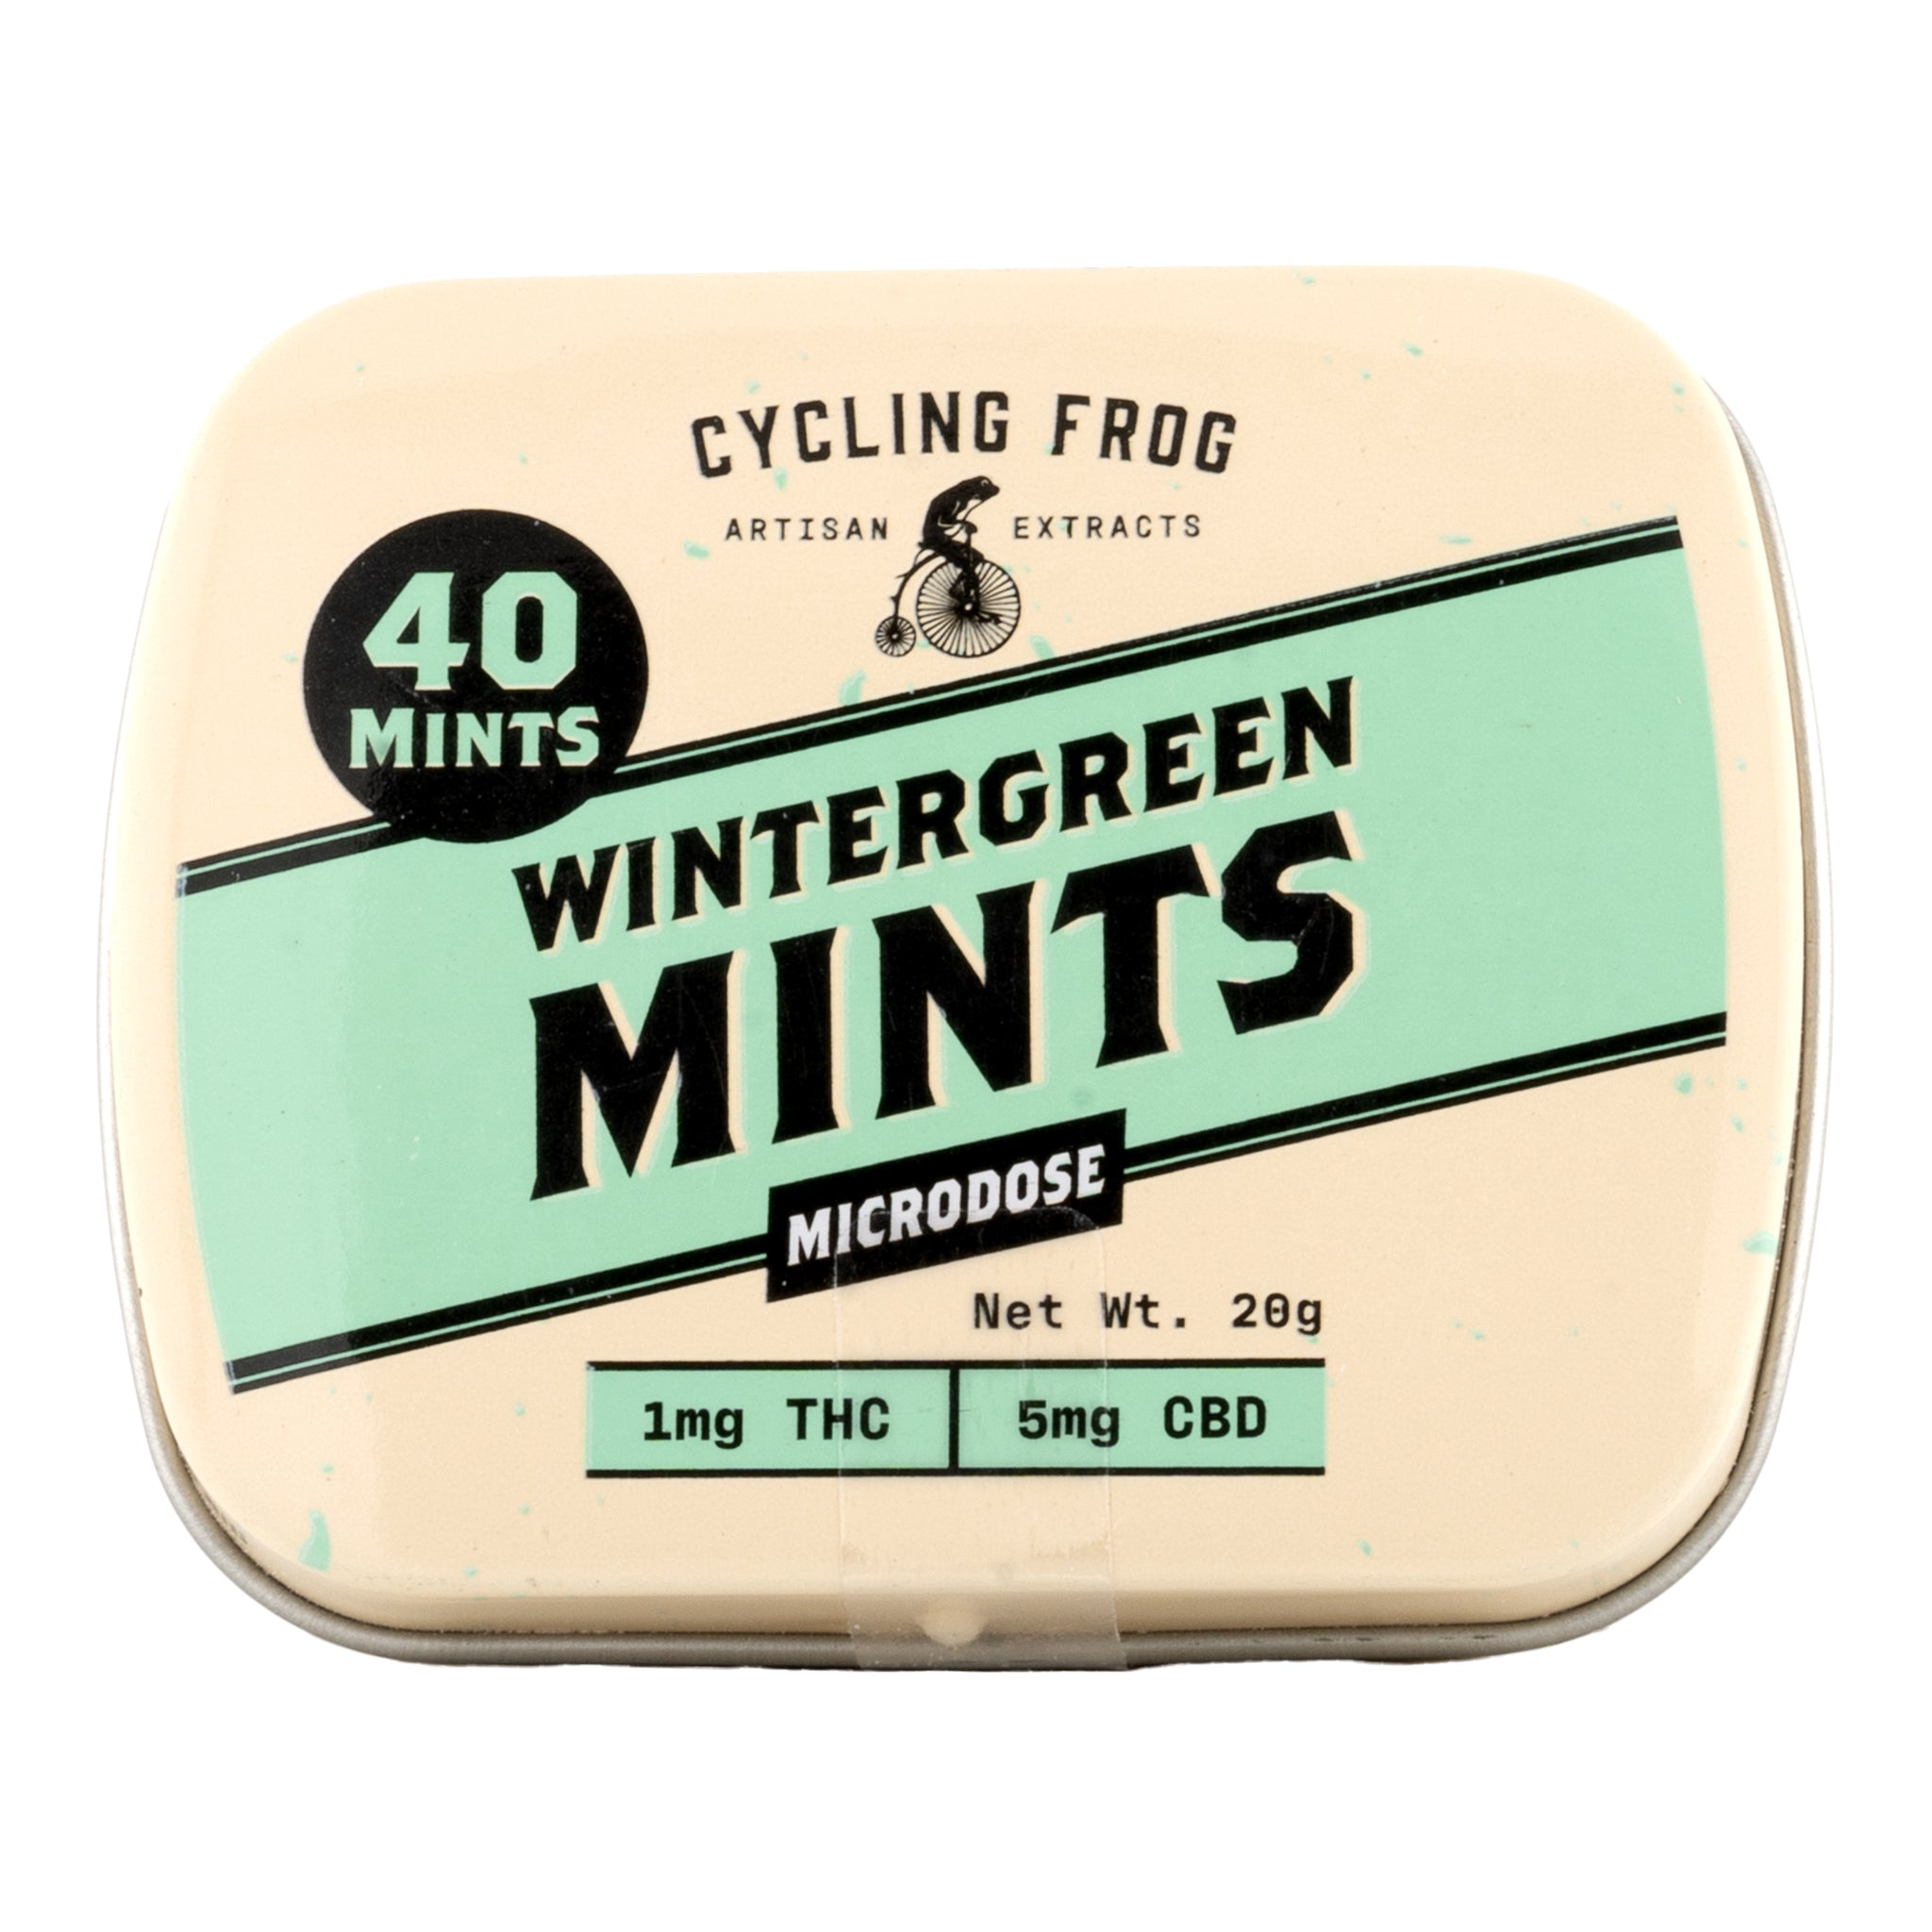 CYCLING FROG Wintergreen Mints 40mg THC